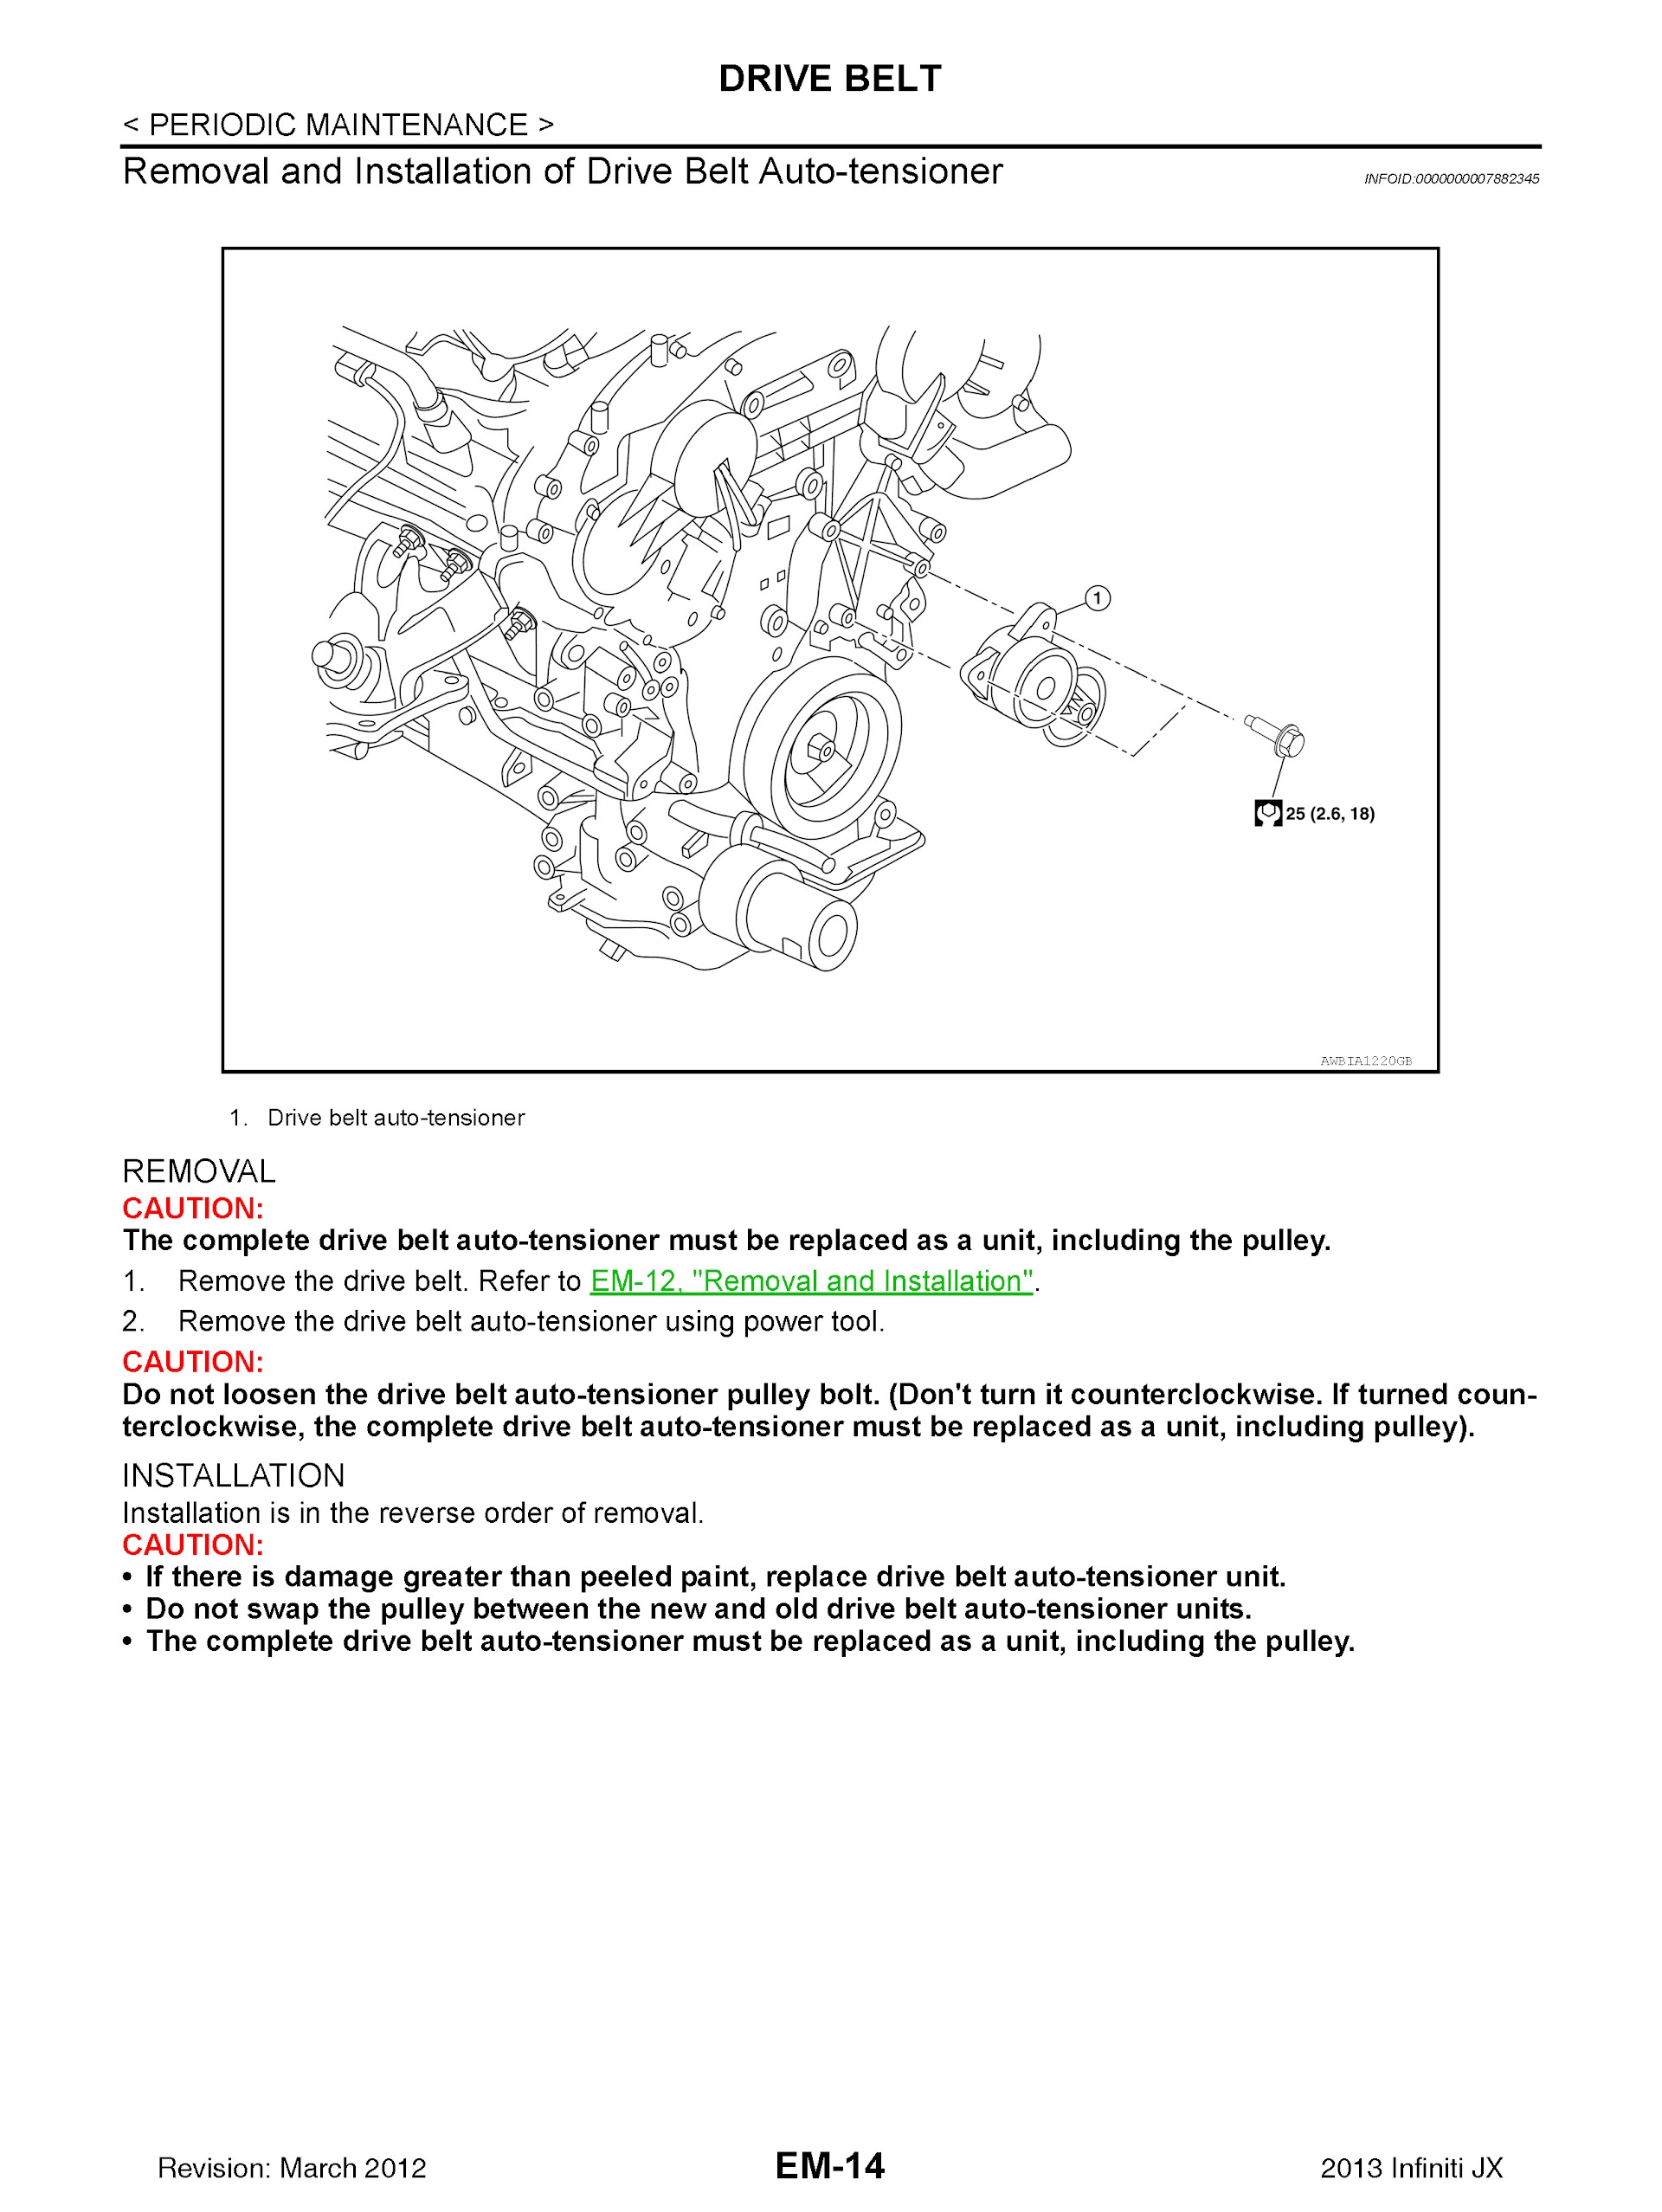 2011-2013 Infiniti QX60 Repair Manual (JX) L50 Series, Drivebelt